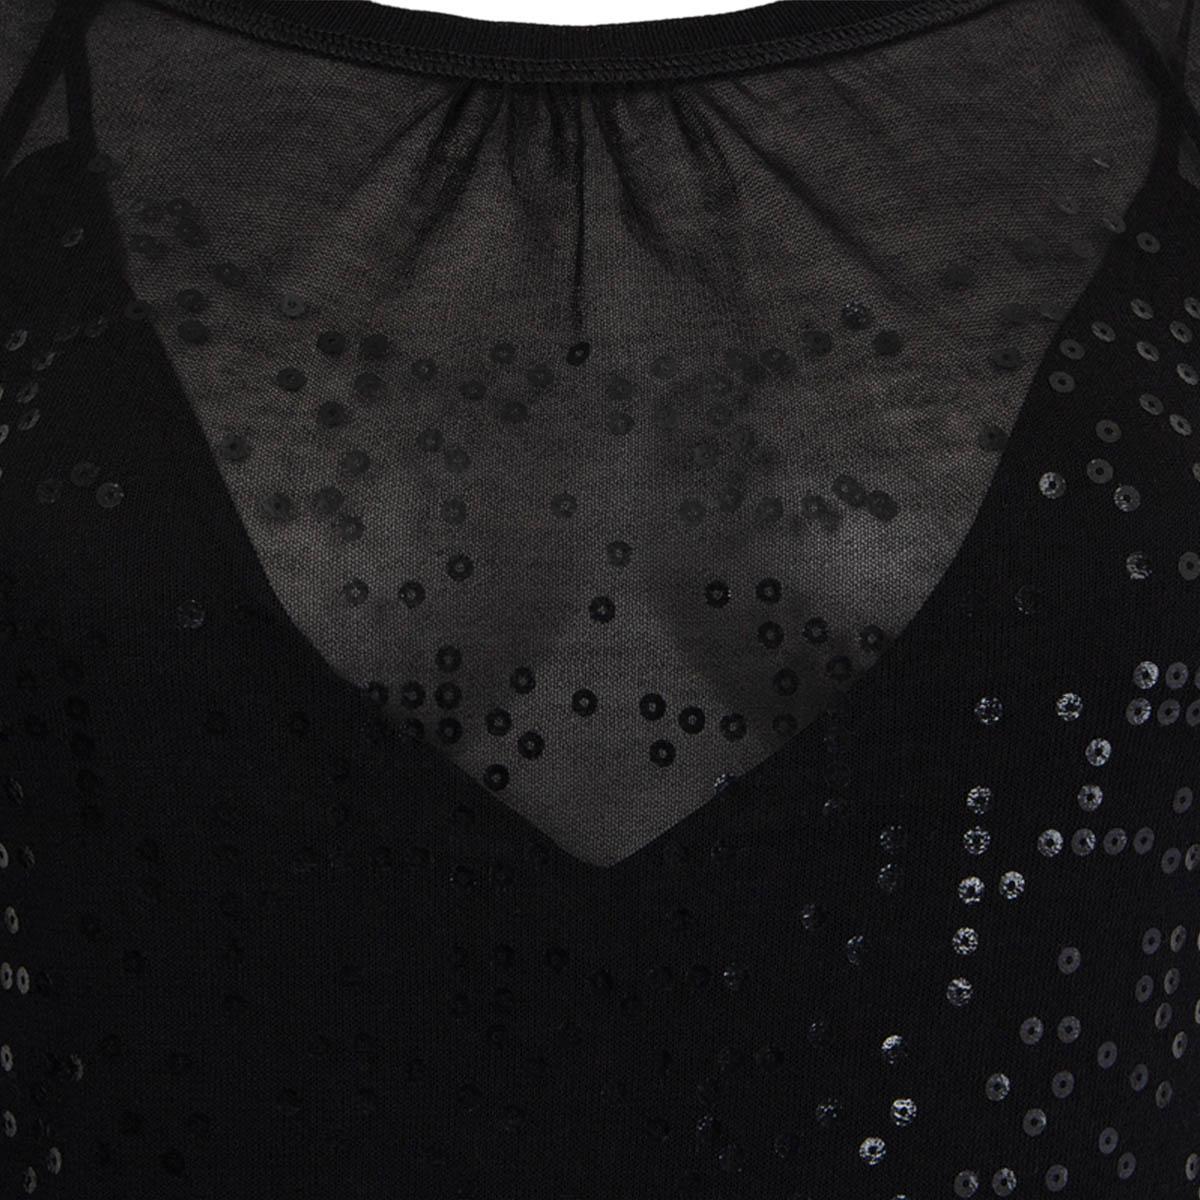 CHANEL black 2017 17P SEQUIN CAMELLIA SHEER SHIFT Dress 38 S For Sale 1